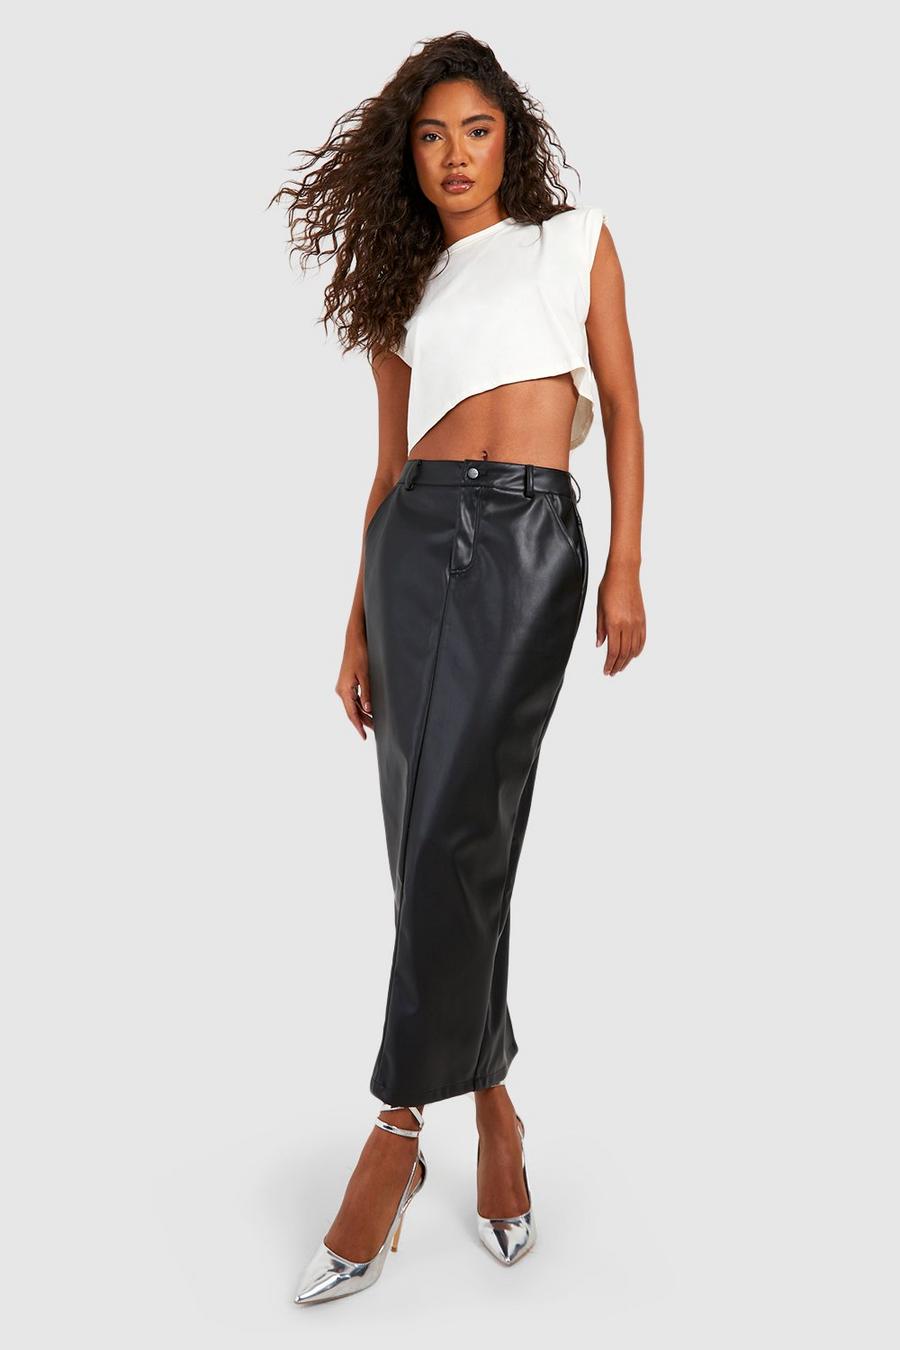 Black Tall Leather Look High Waisted Midaxi Skirt